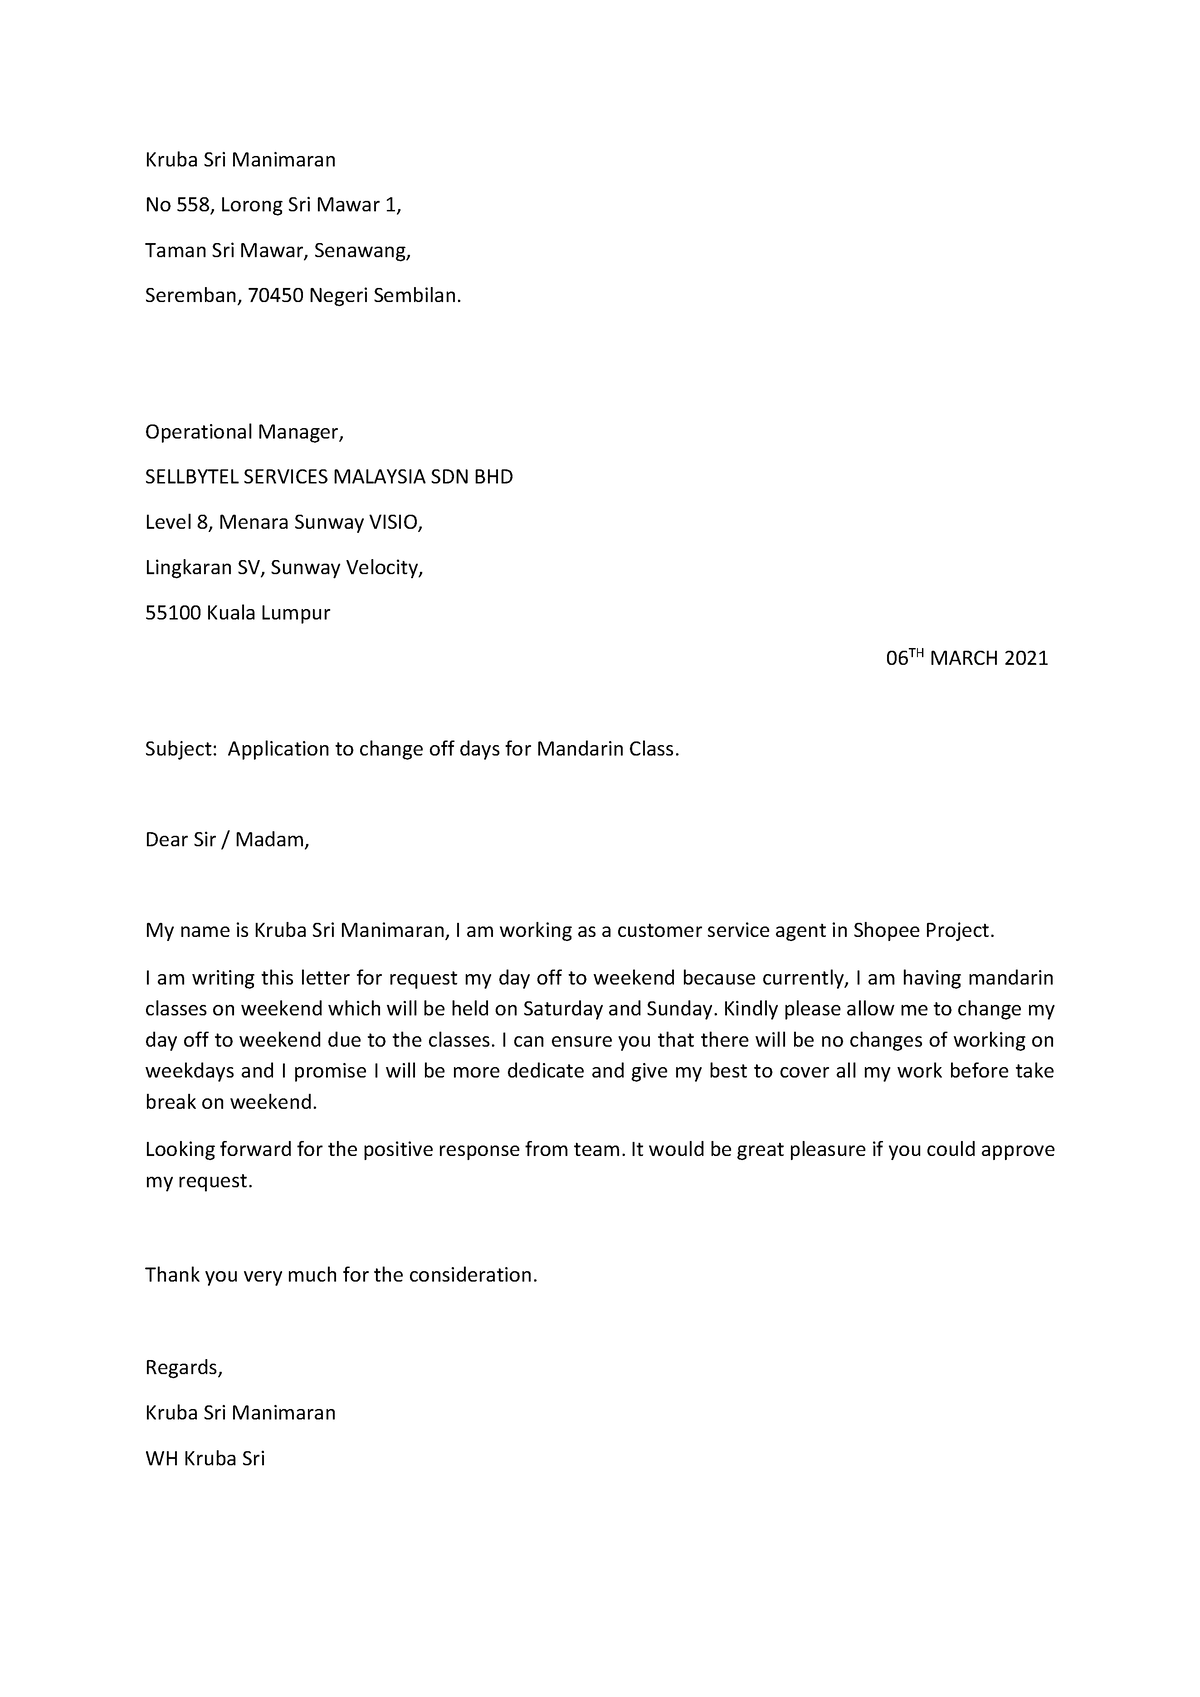 Application letter for change OFF Days - Kruba Sri Manimaran No 558 ...